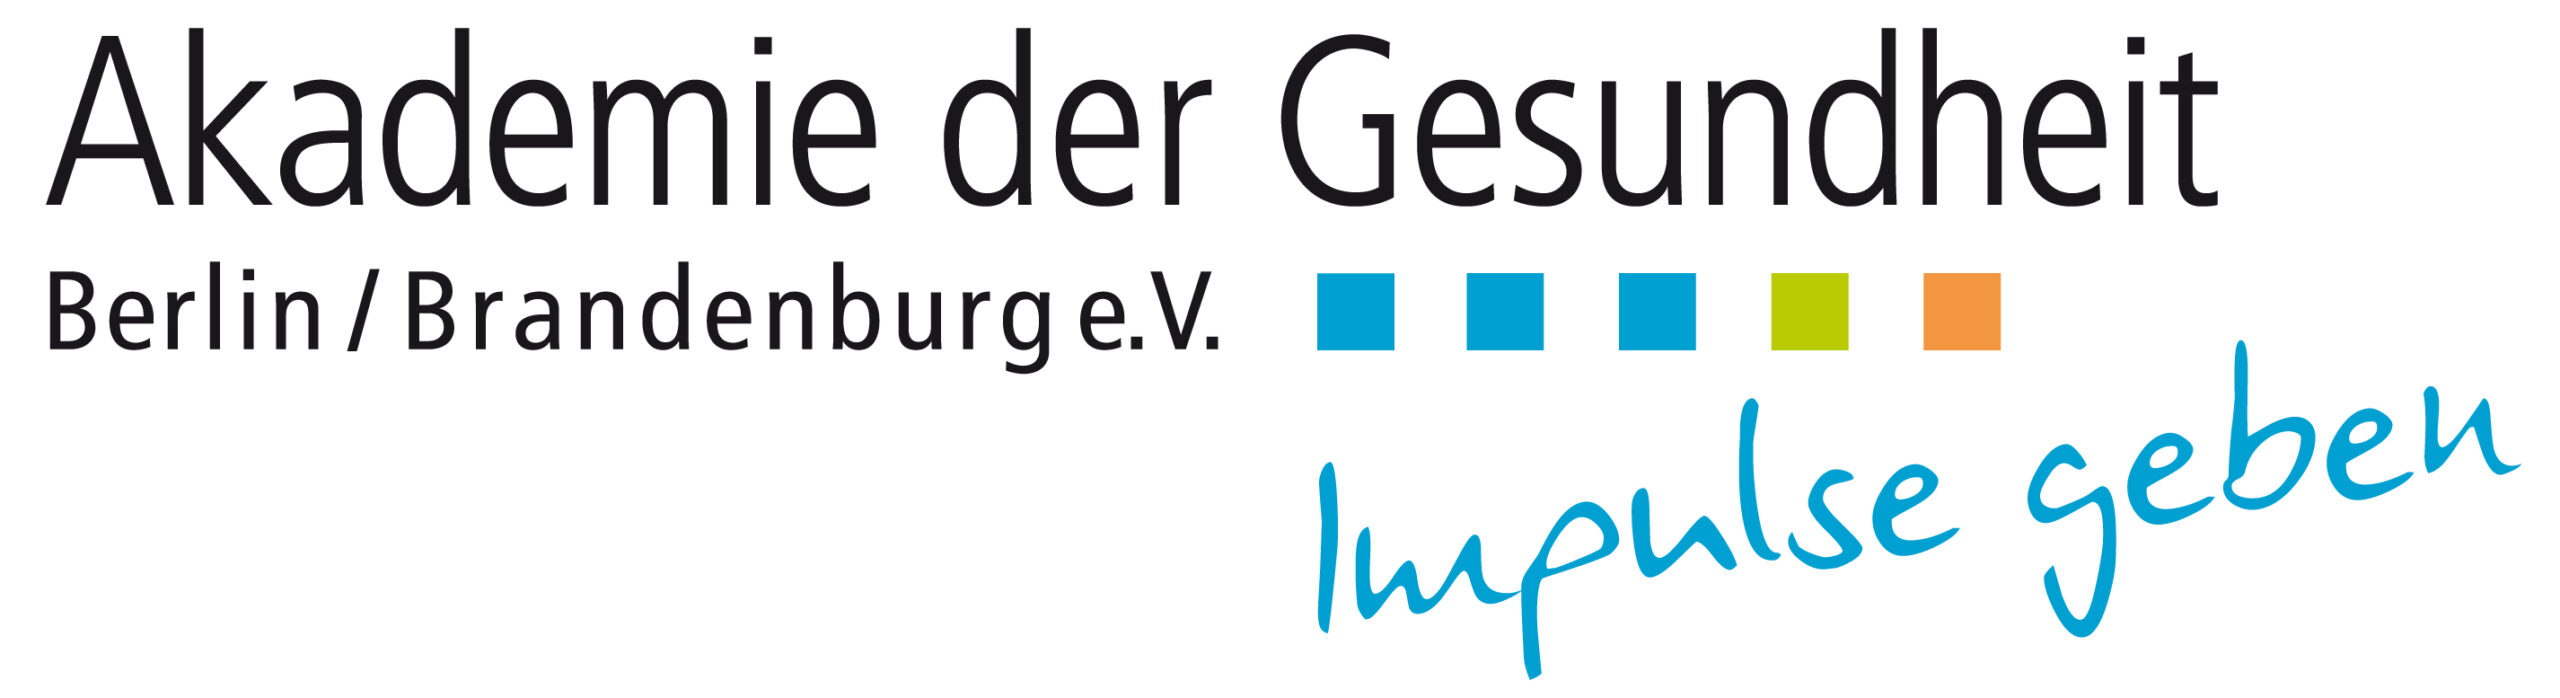 210909 Akademie Berlin Logo